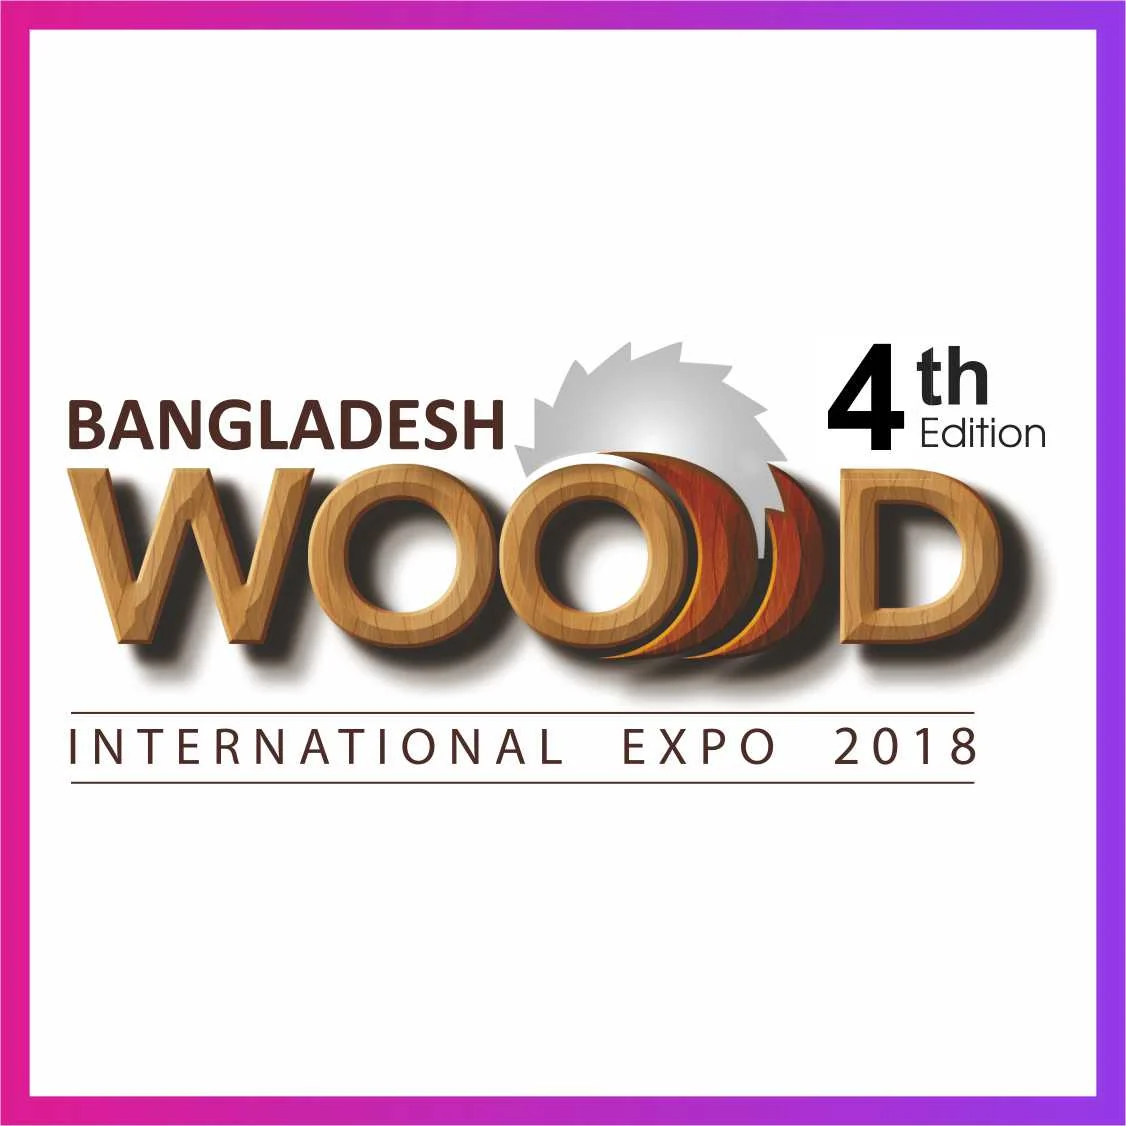 Bangladesh Wood International Expo 2018